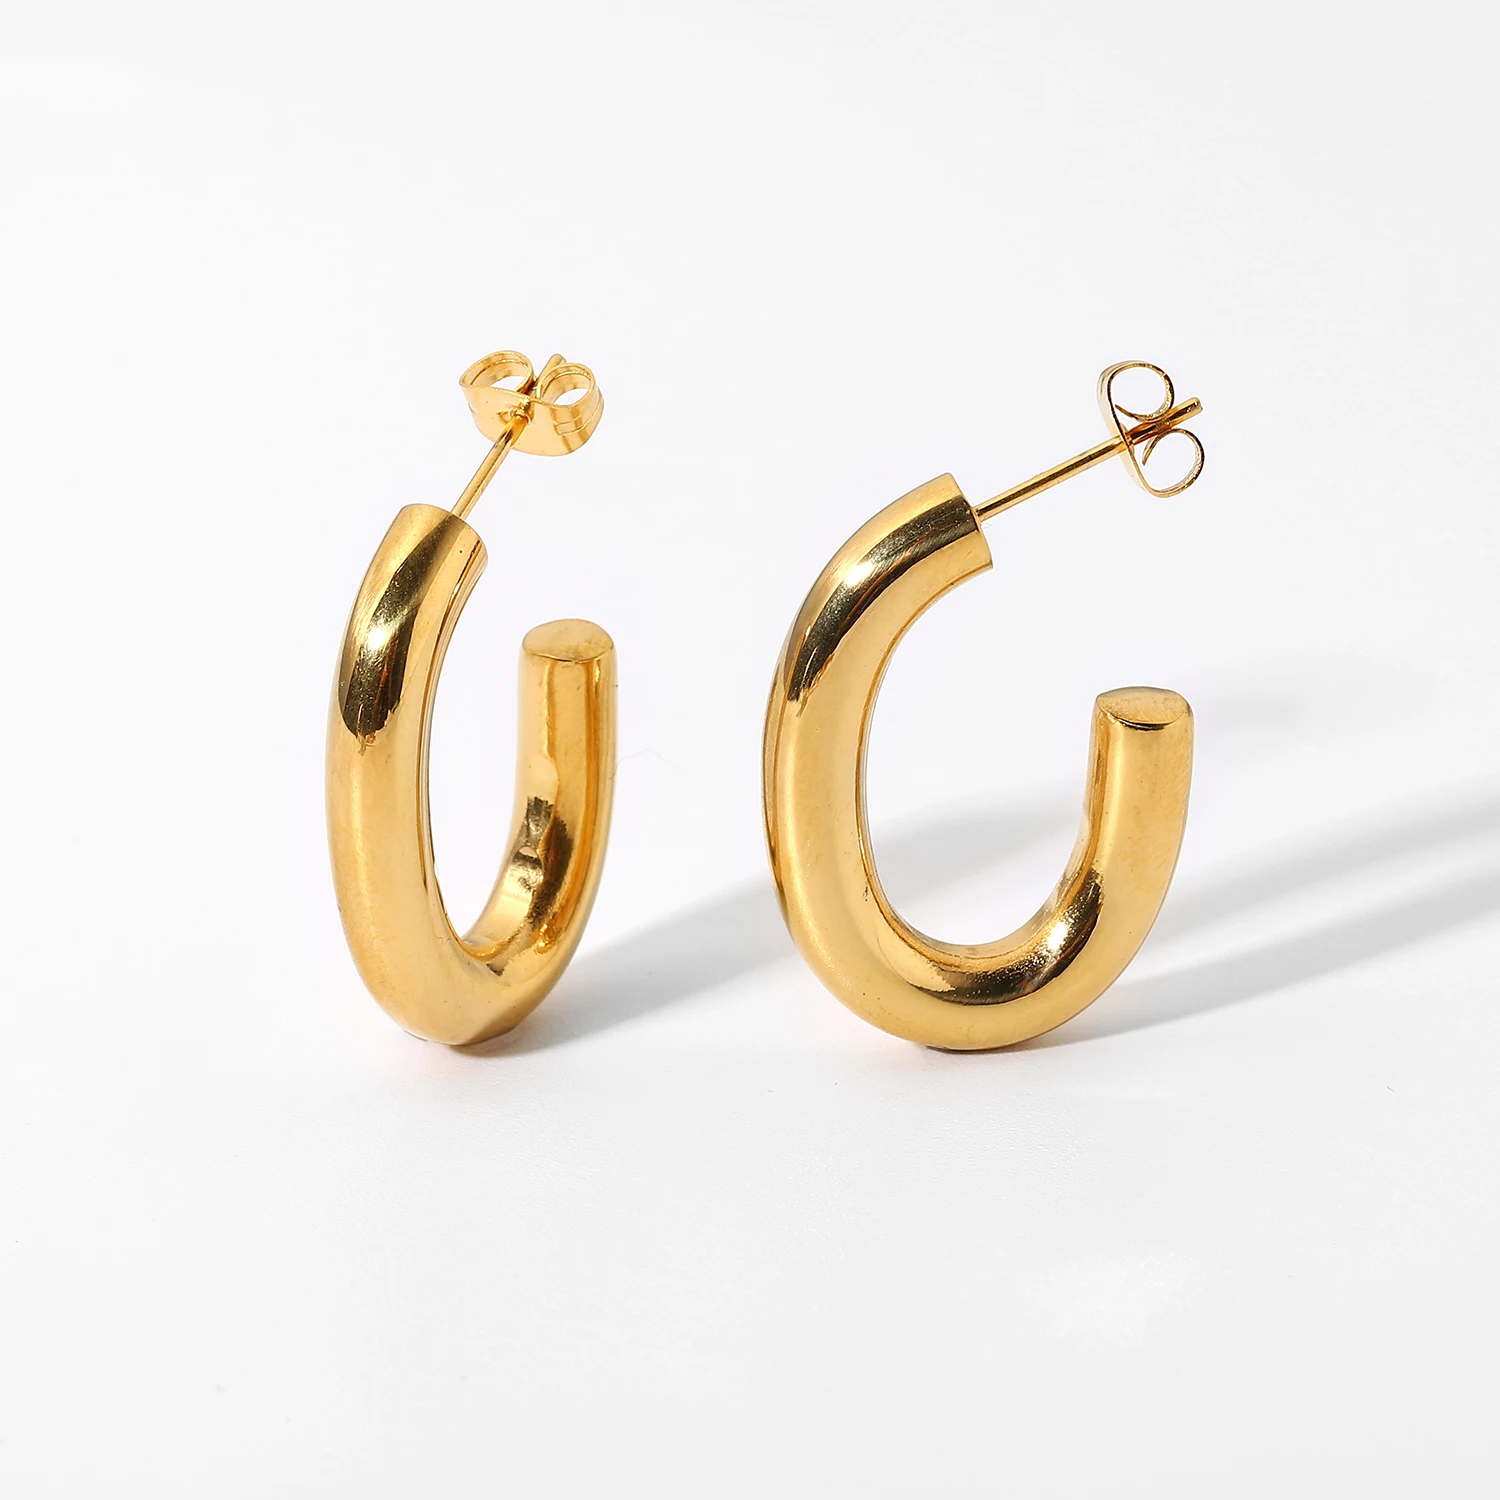 

Water Proof 18K Gold Plated Stainless Steel Earrings Jewelry C Shaped Oval Huggie Earrings for Women